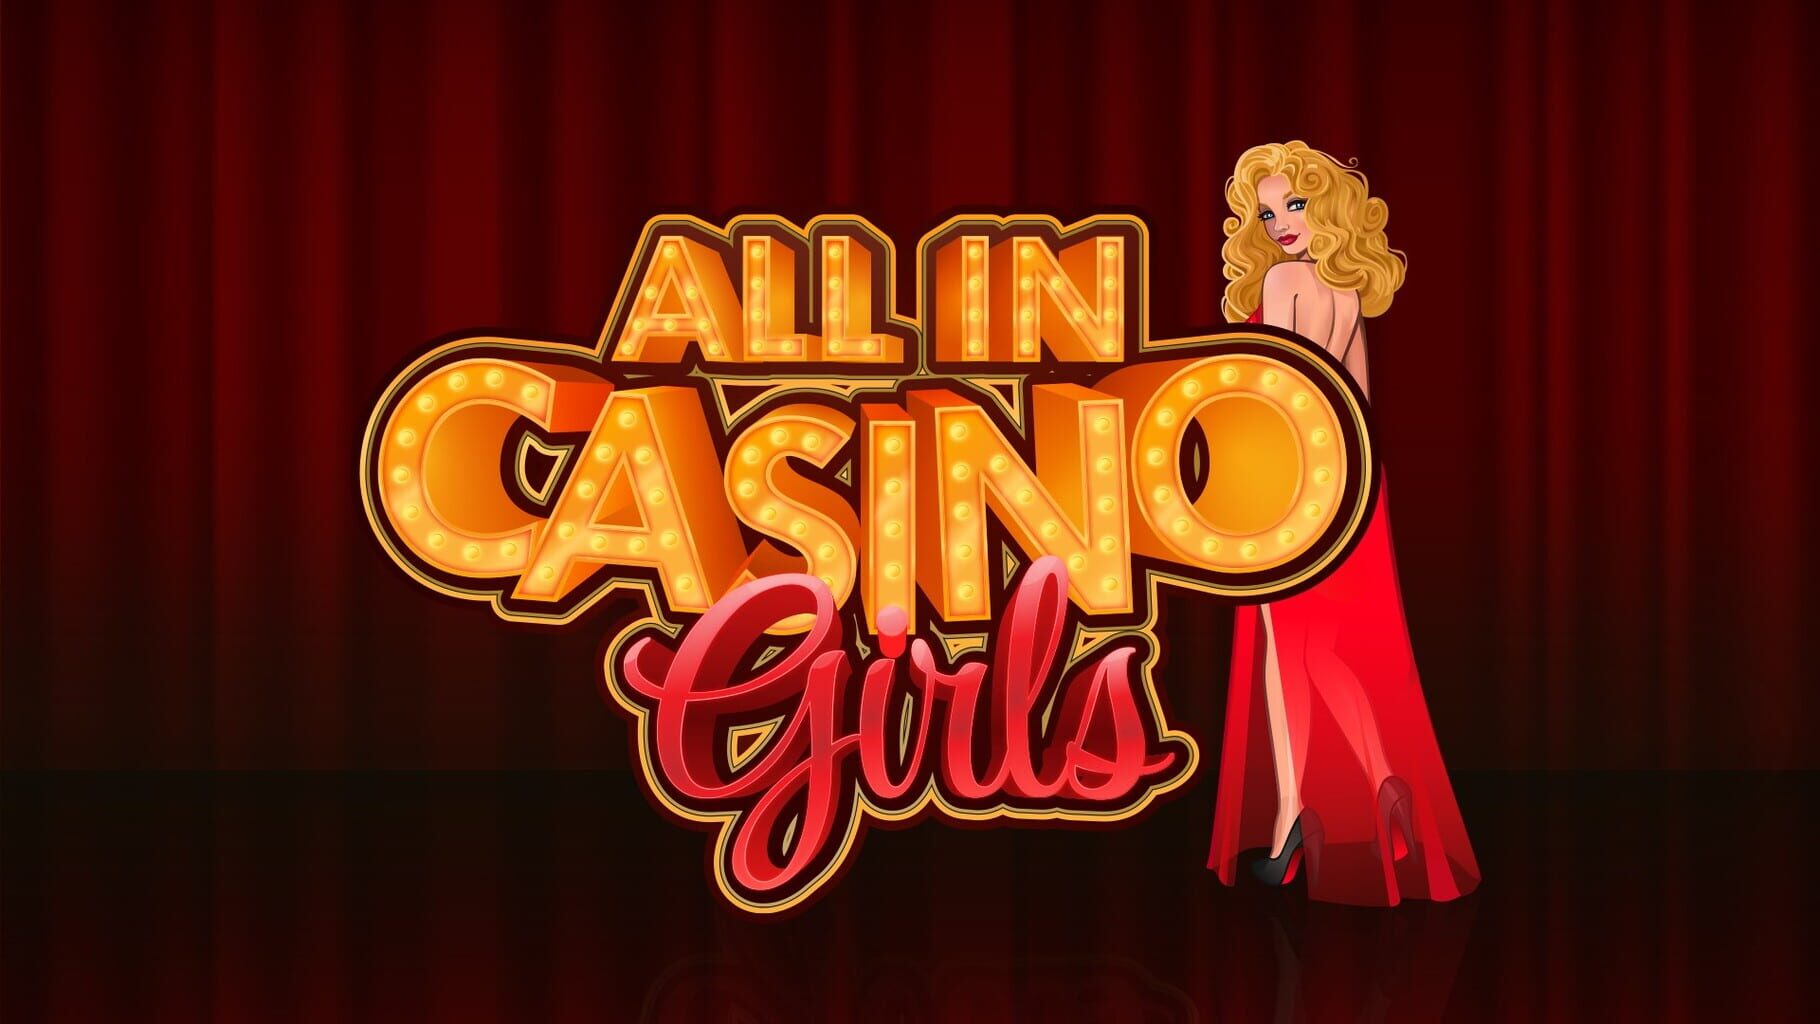 All in Casino Girls artwork